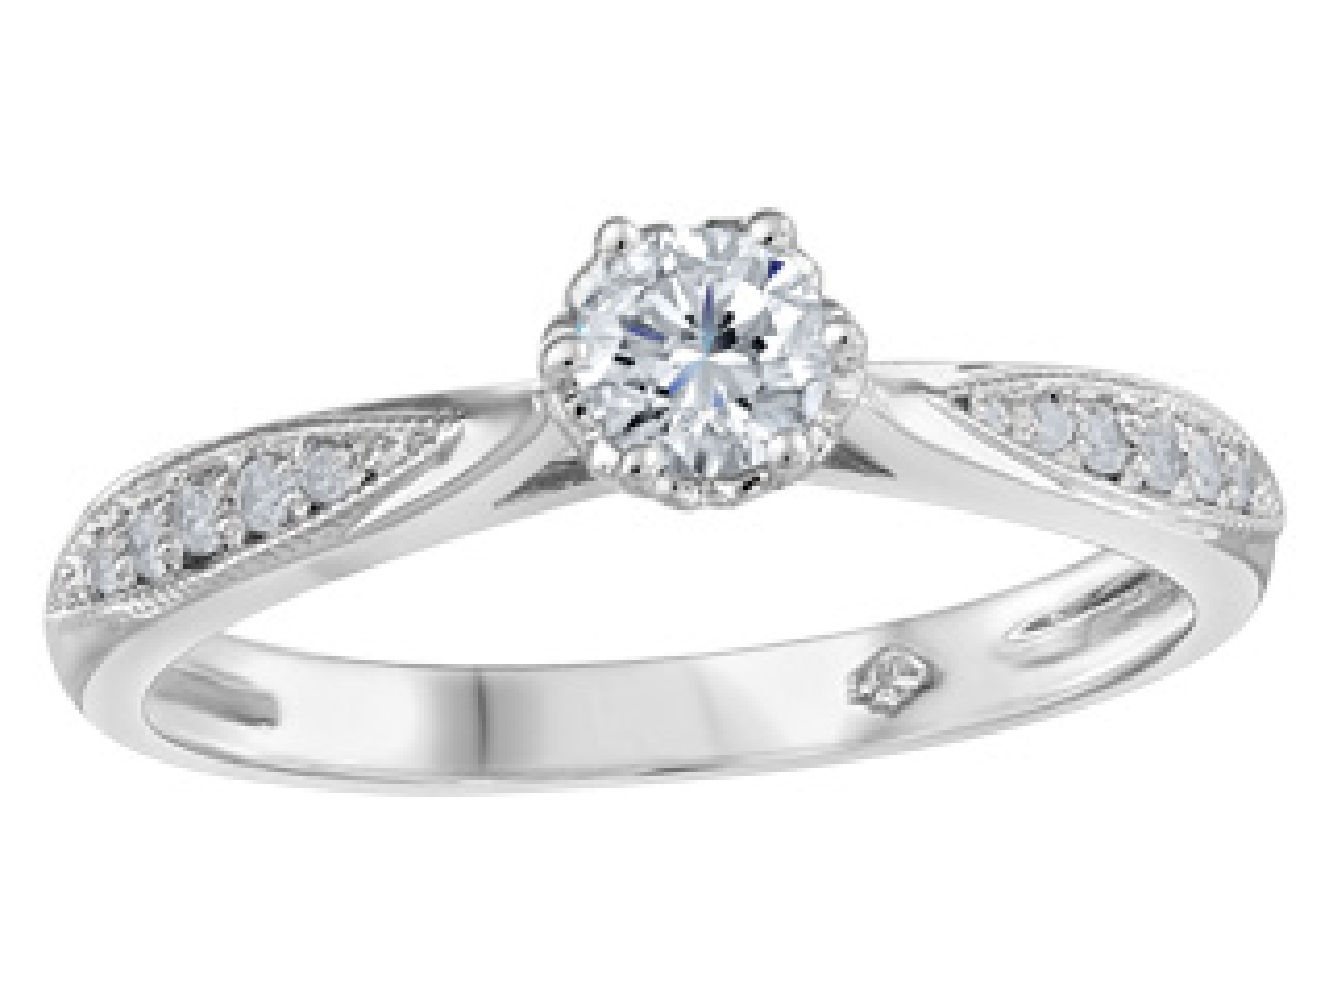 Canadian Diamond Engagement Ring 0.27ctw
14KT ...